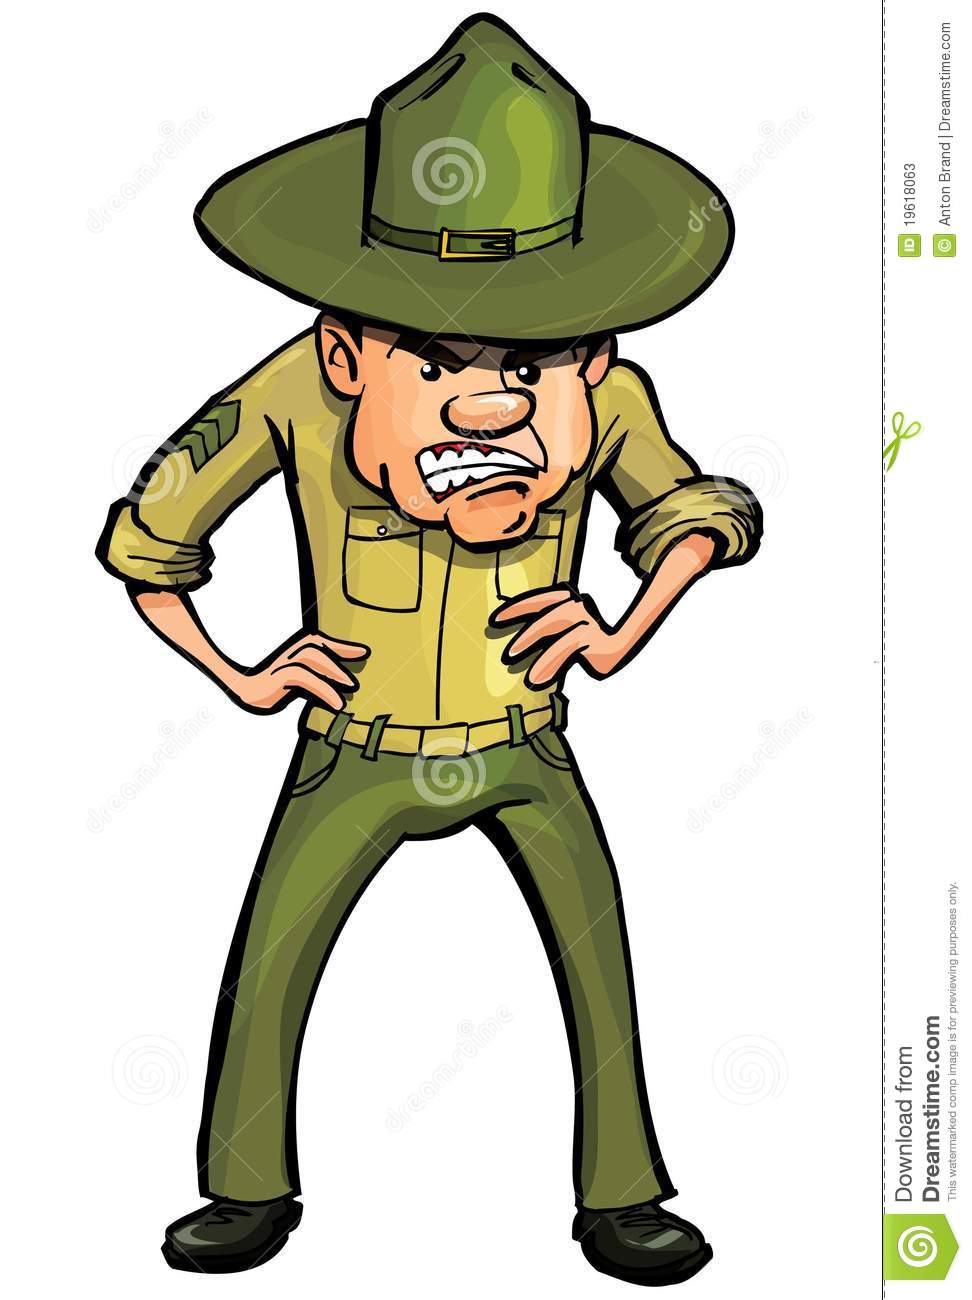 Angry Cartoon Drill Sergeant Stock Photos   Image  19618063